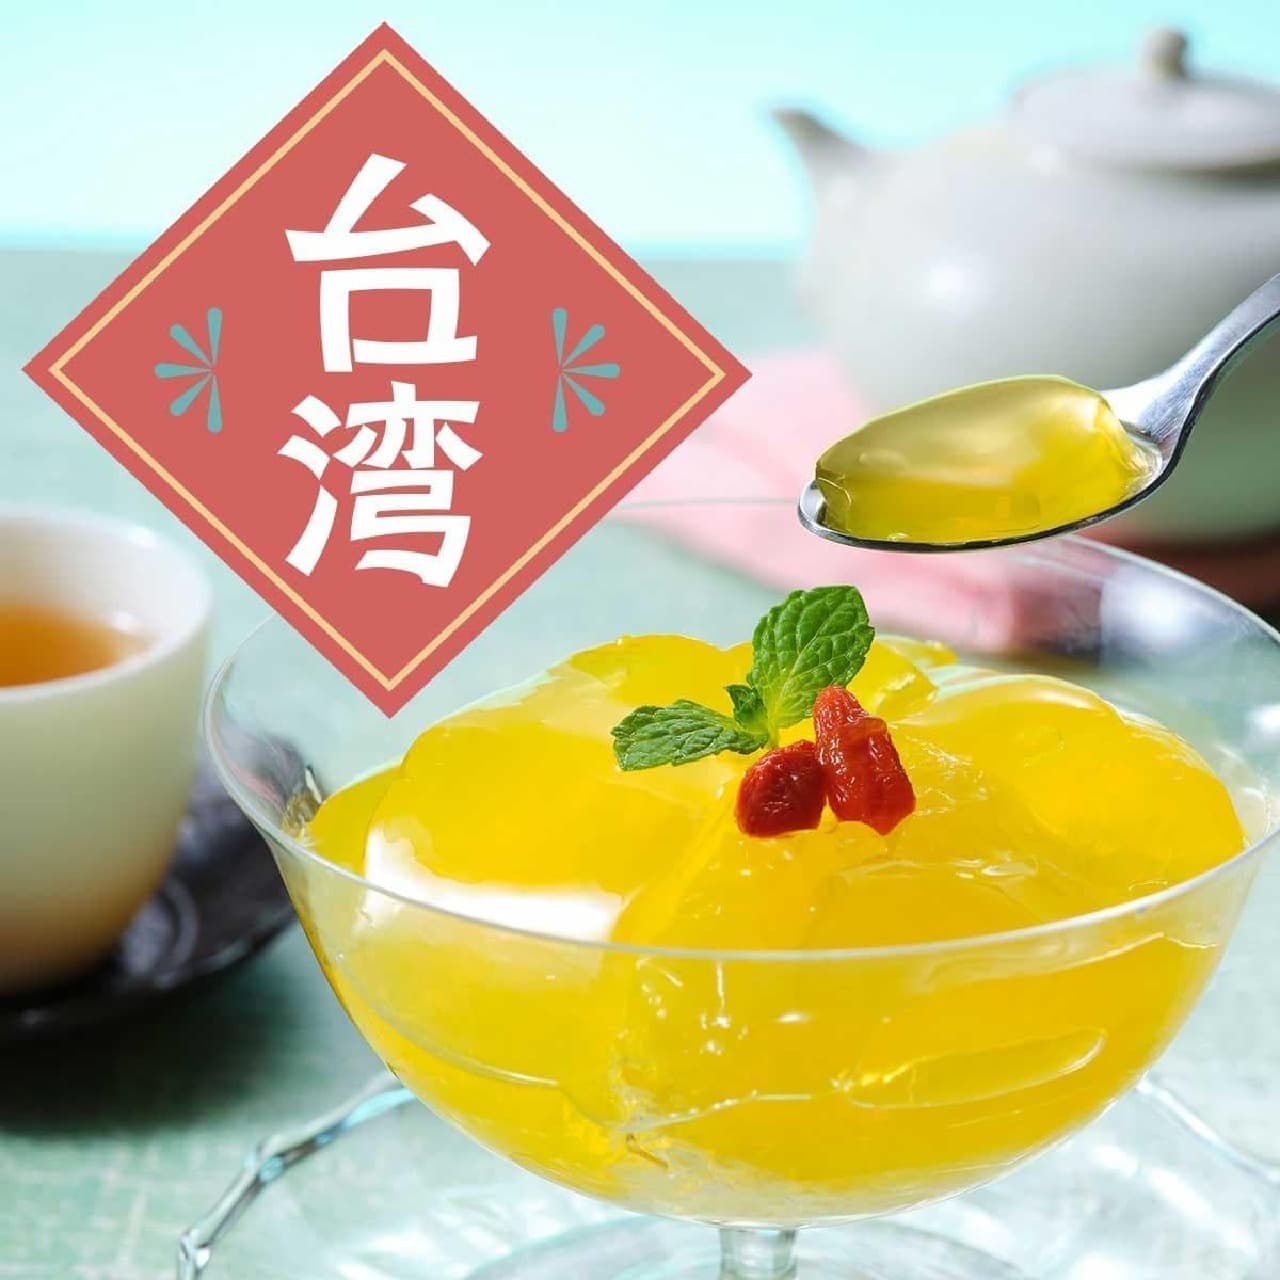 KALDI Taiwan Sweets and Drinks Summary